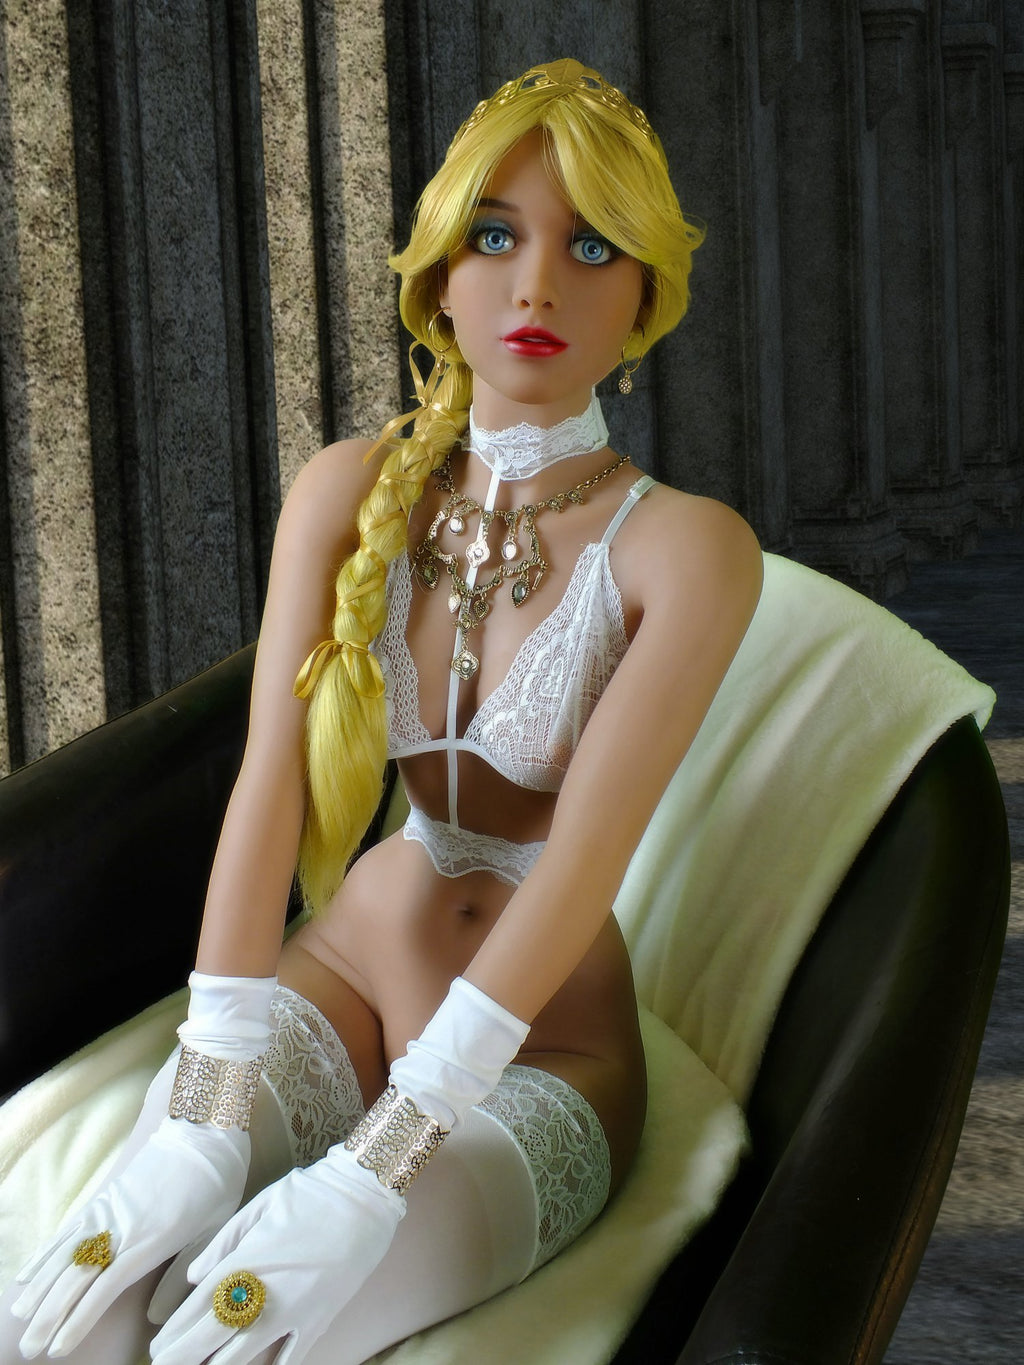 paula 168cm blonde skinny flat chested tpe yl sex doll